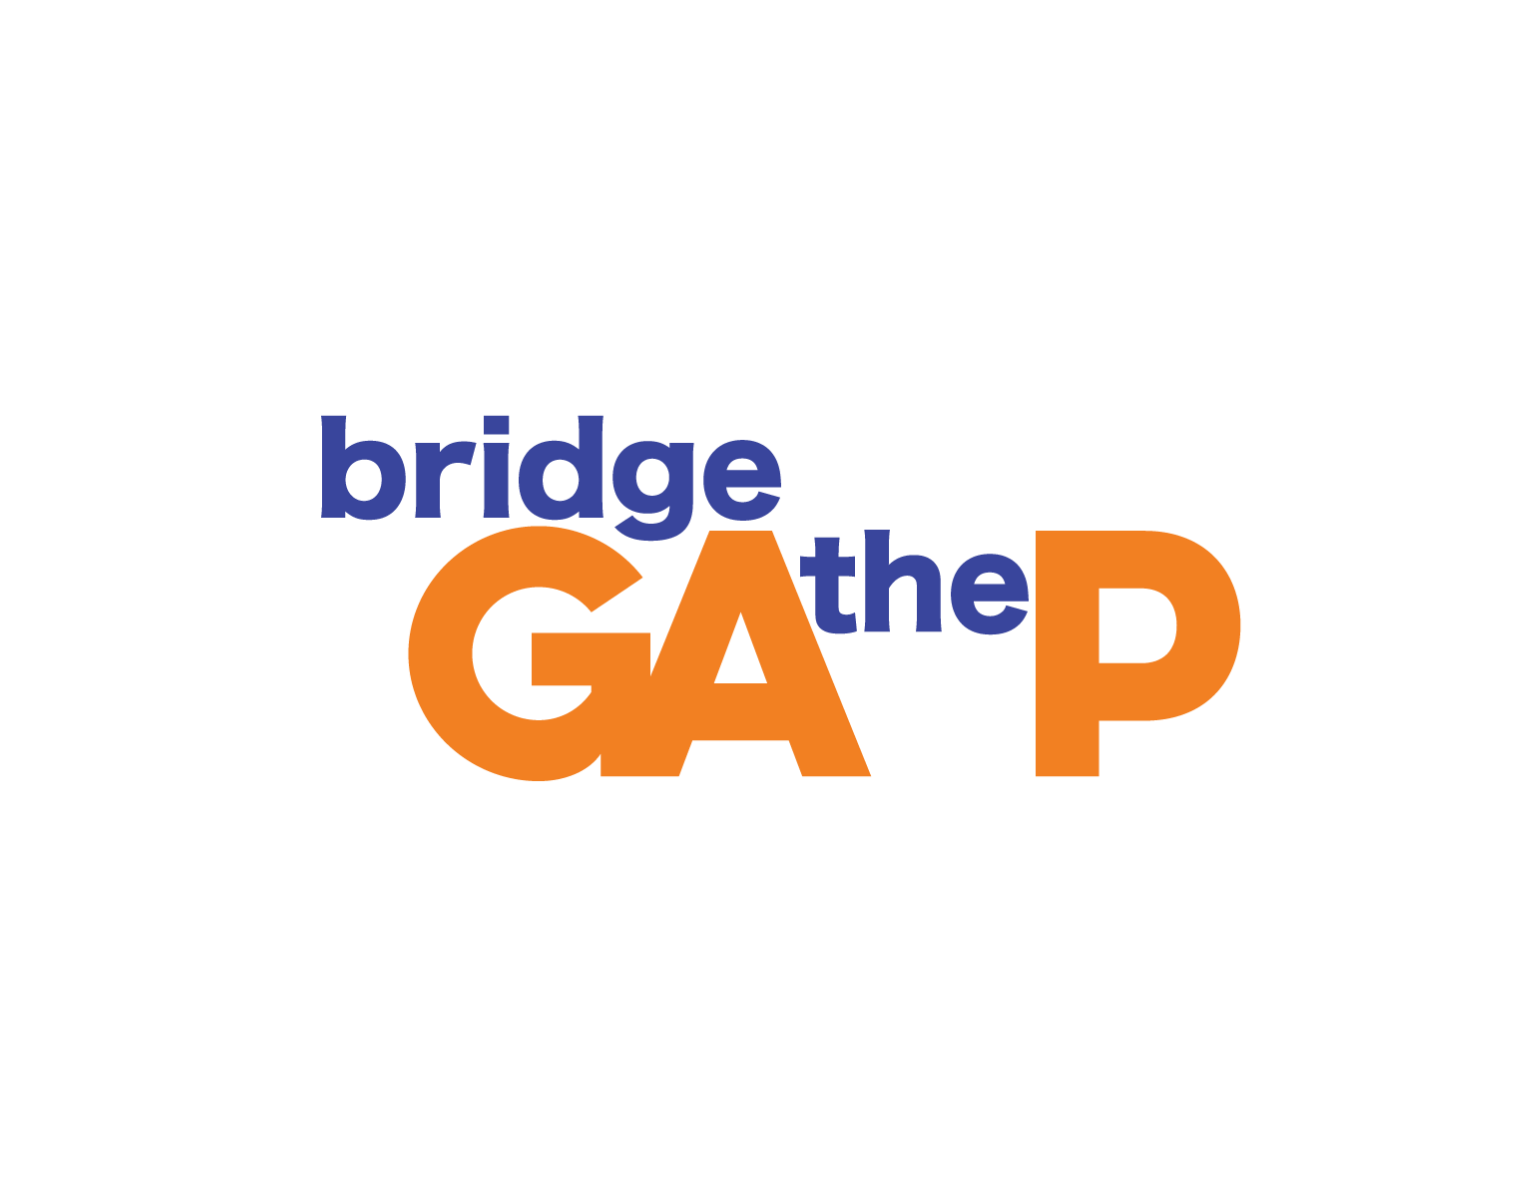 Bridge the Gap logo, job opportunity